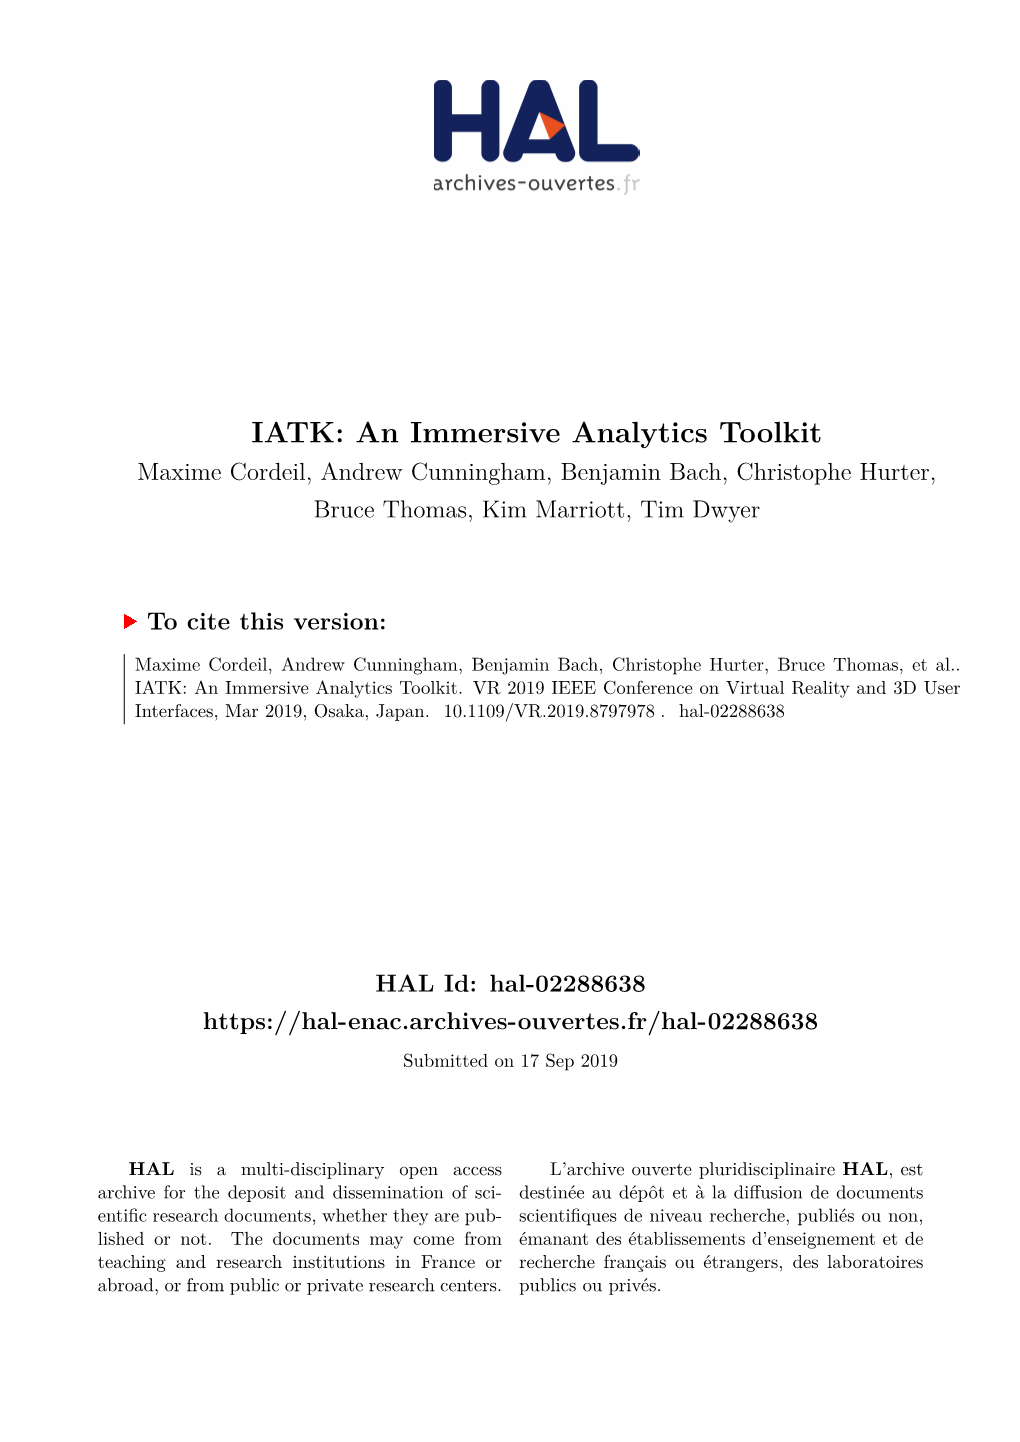 IATK: an Immersive Analytics Toolkit Maxime Cordeil, Andrew Cunningham, Benjamin Bach, Christophe Hurter, Bruce Thomas, Kim Marriott, Tim Dwyer